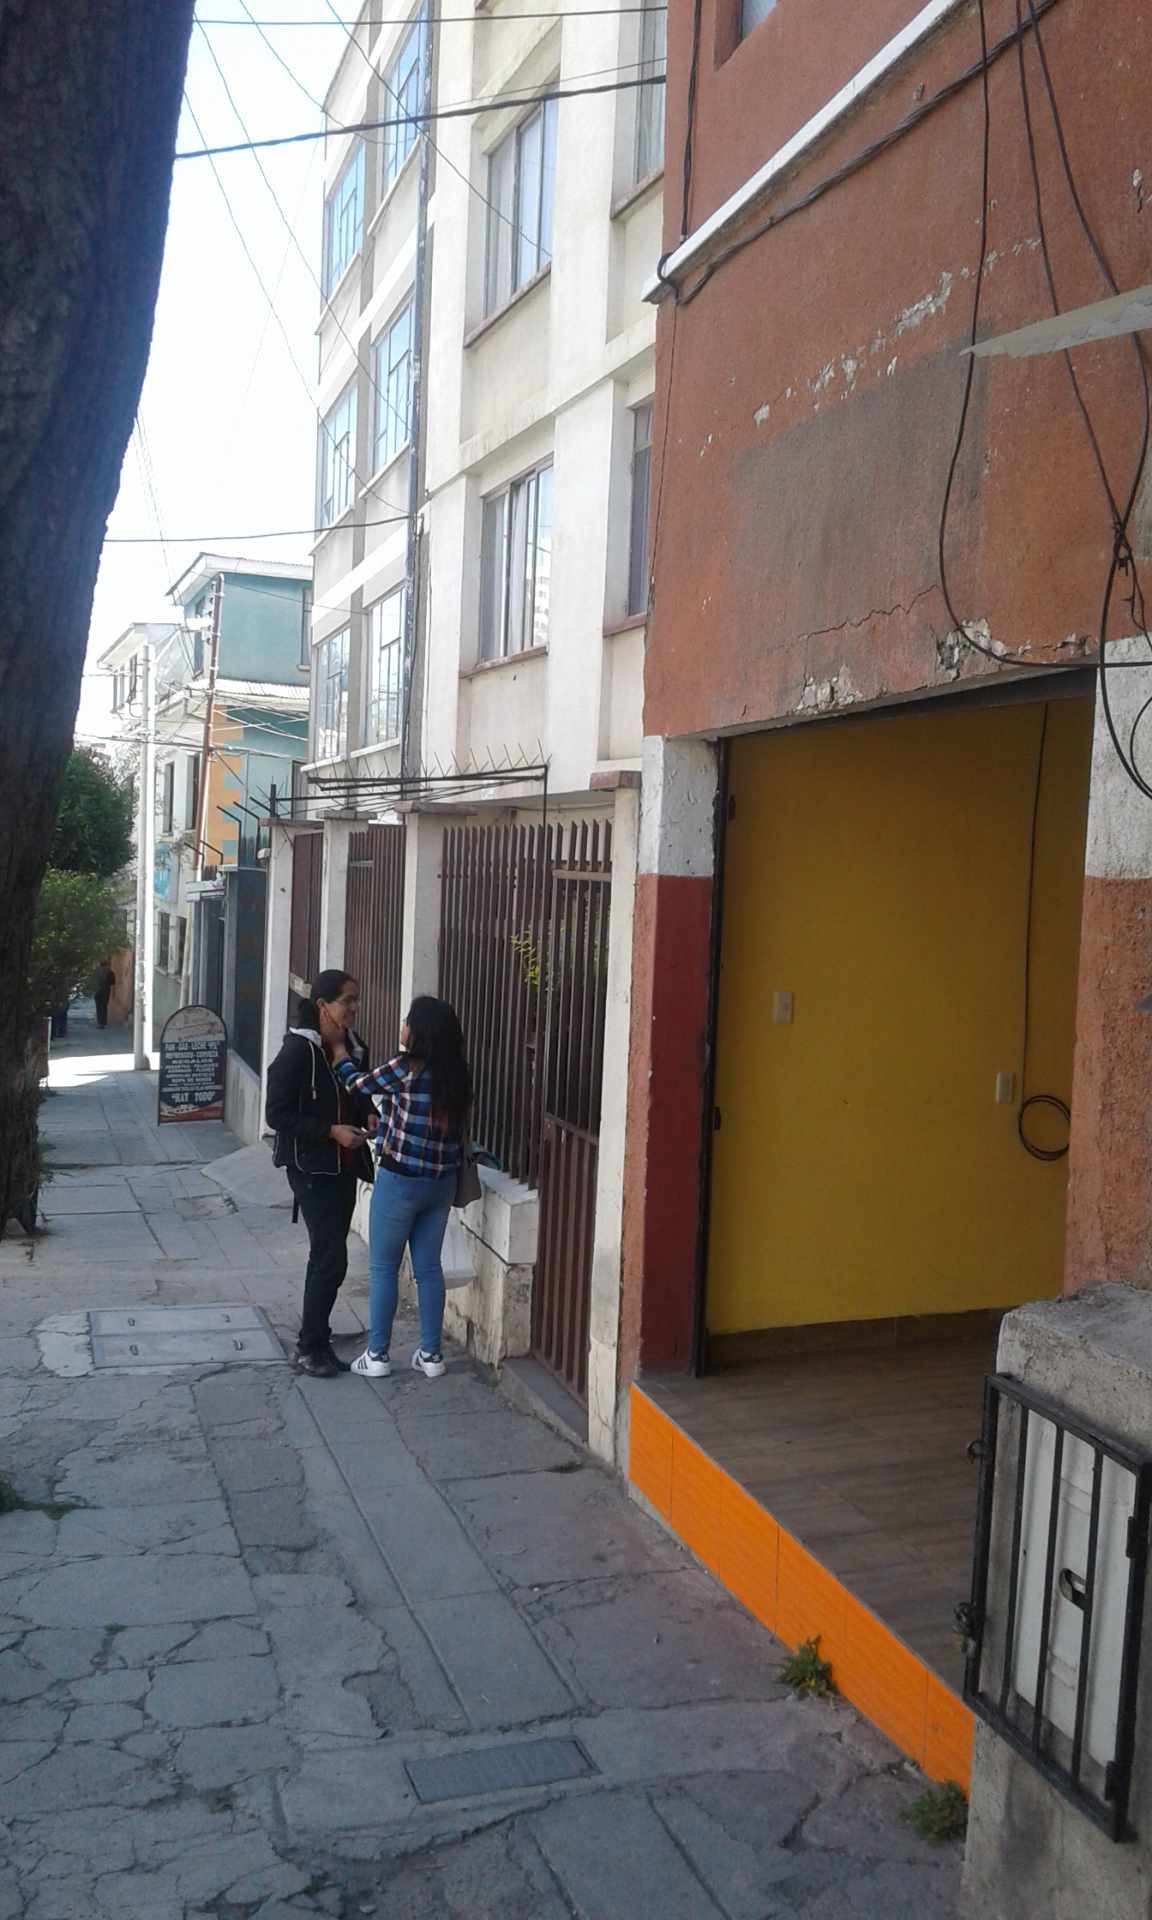 Oficina Calle Cuba No 1652A entre Carrasco y Pasoskanki zona de Miraflores La Paz - Bolivia (OFERTABLE y entrega inmediata) Foto 5